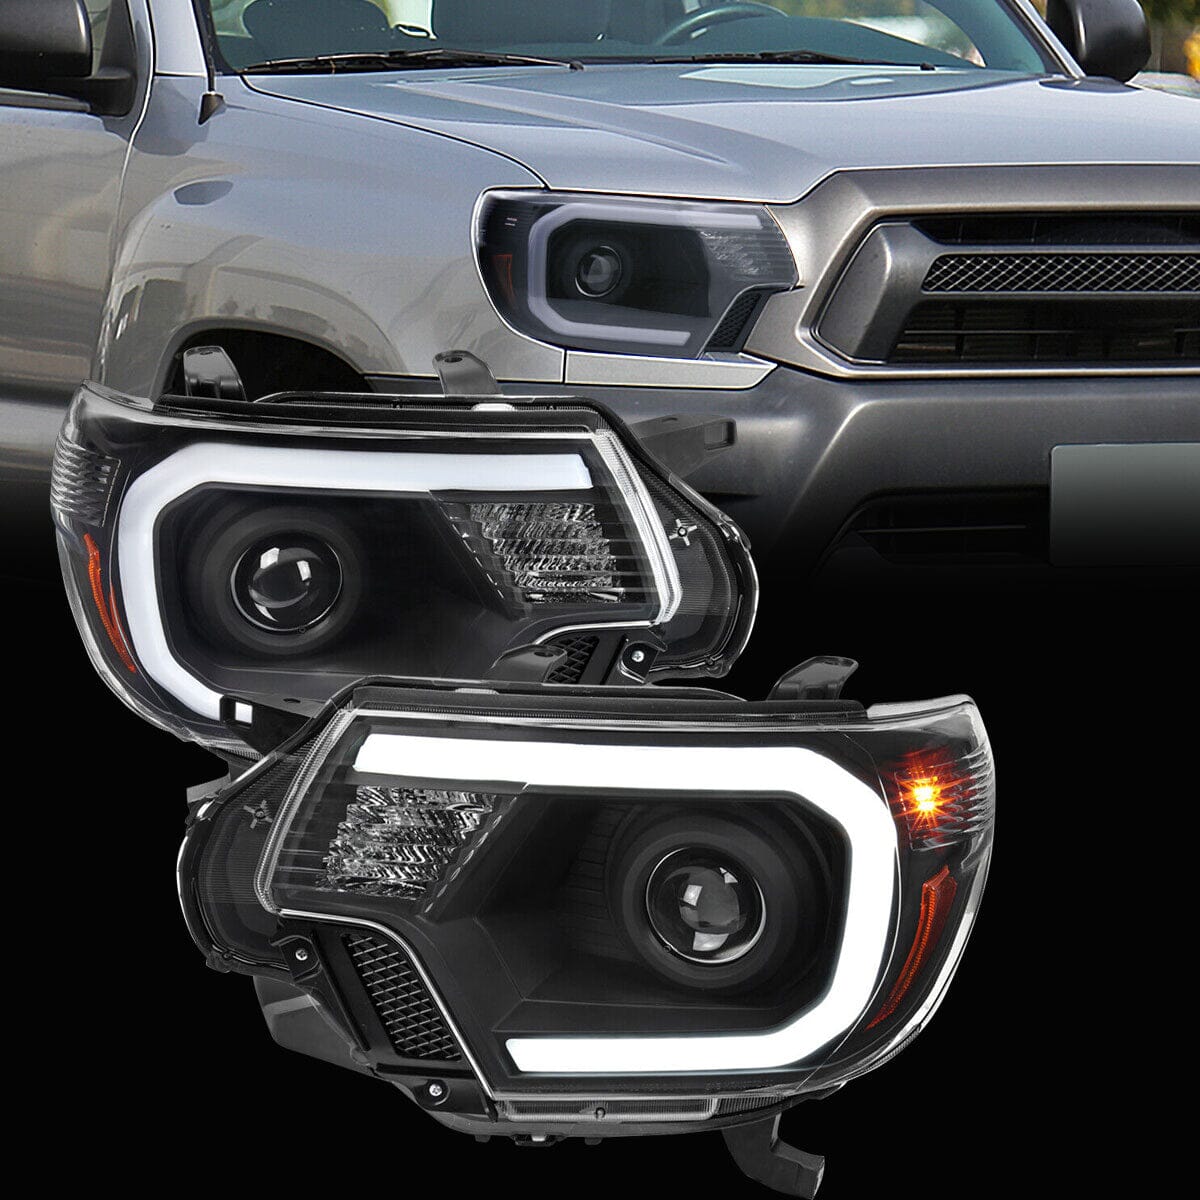  Black Projector Headlights w/ LED Strip Bar For 2012-2015 Toyota Tacoma